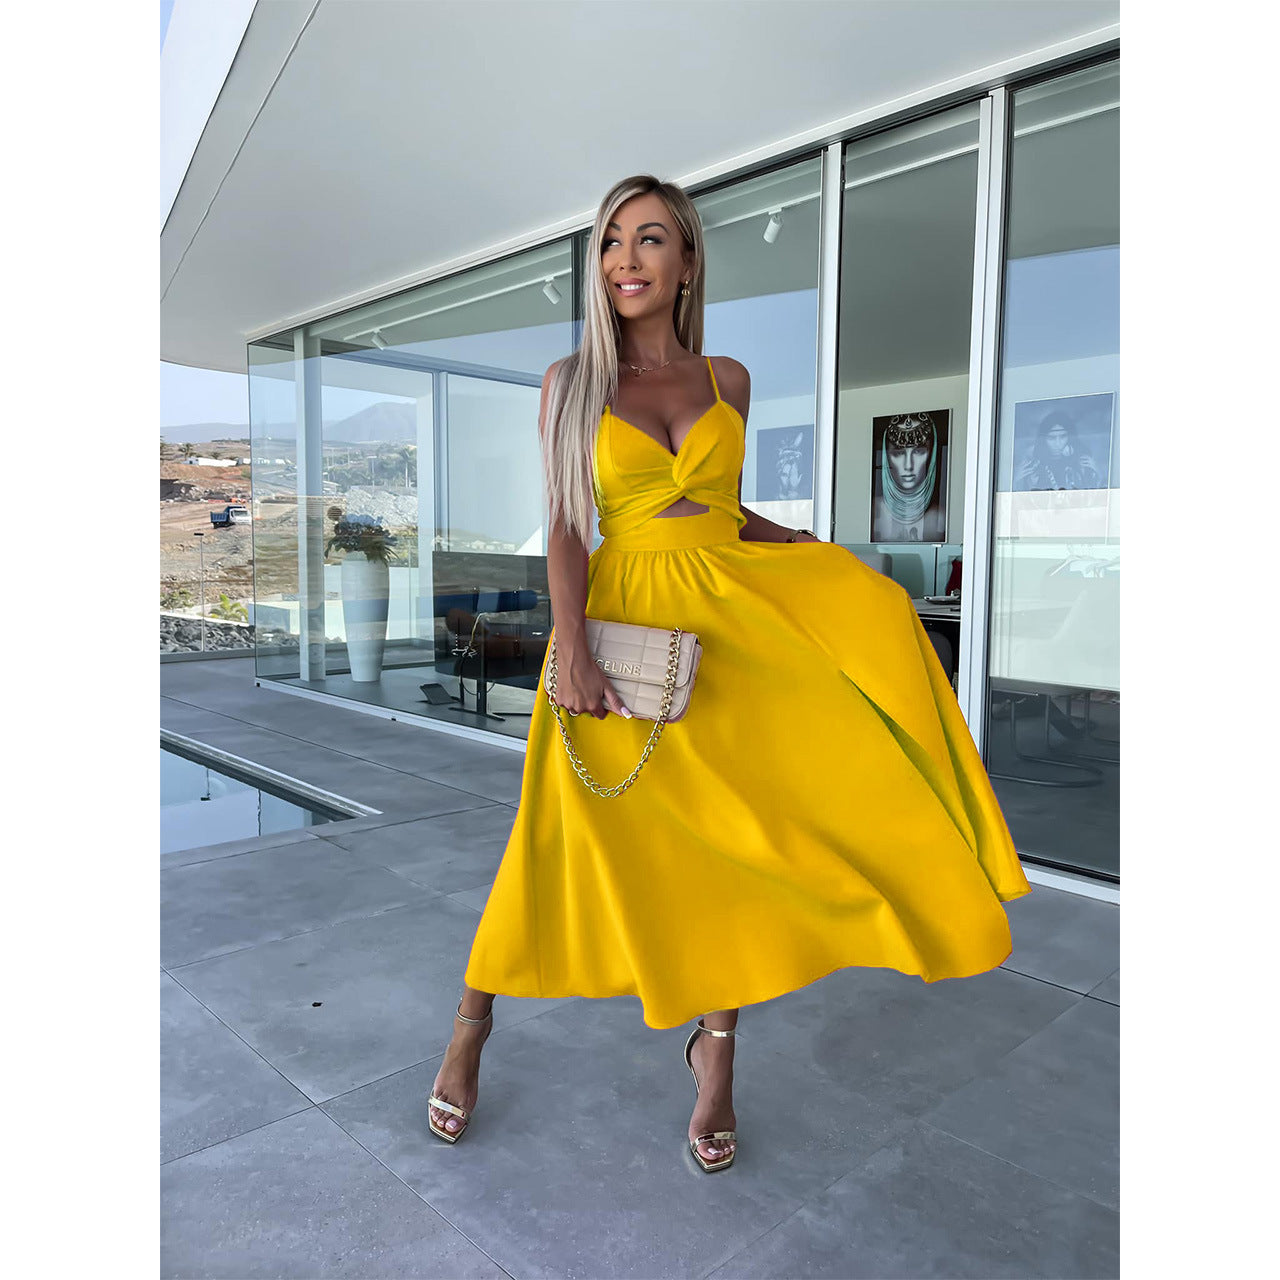 Elegant Midriff Baring Summer Dresses-Dresses-Yellow-S-Free Shipping Leatheretro